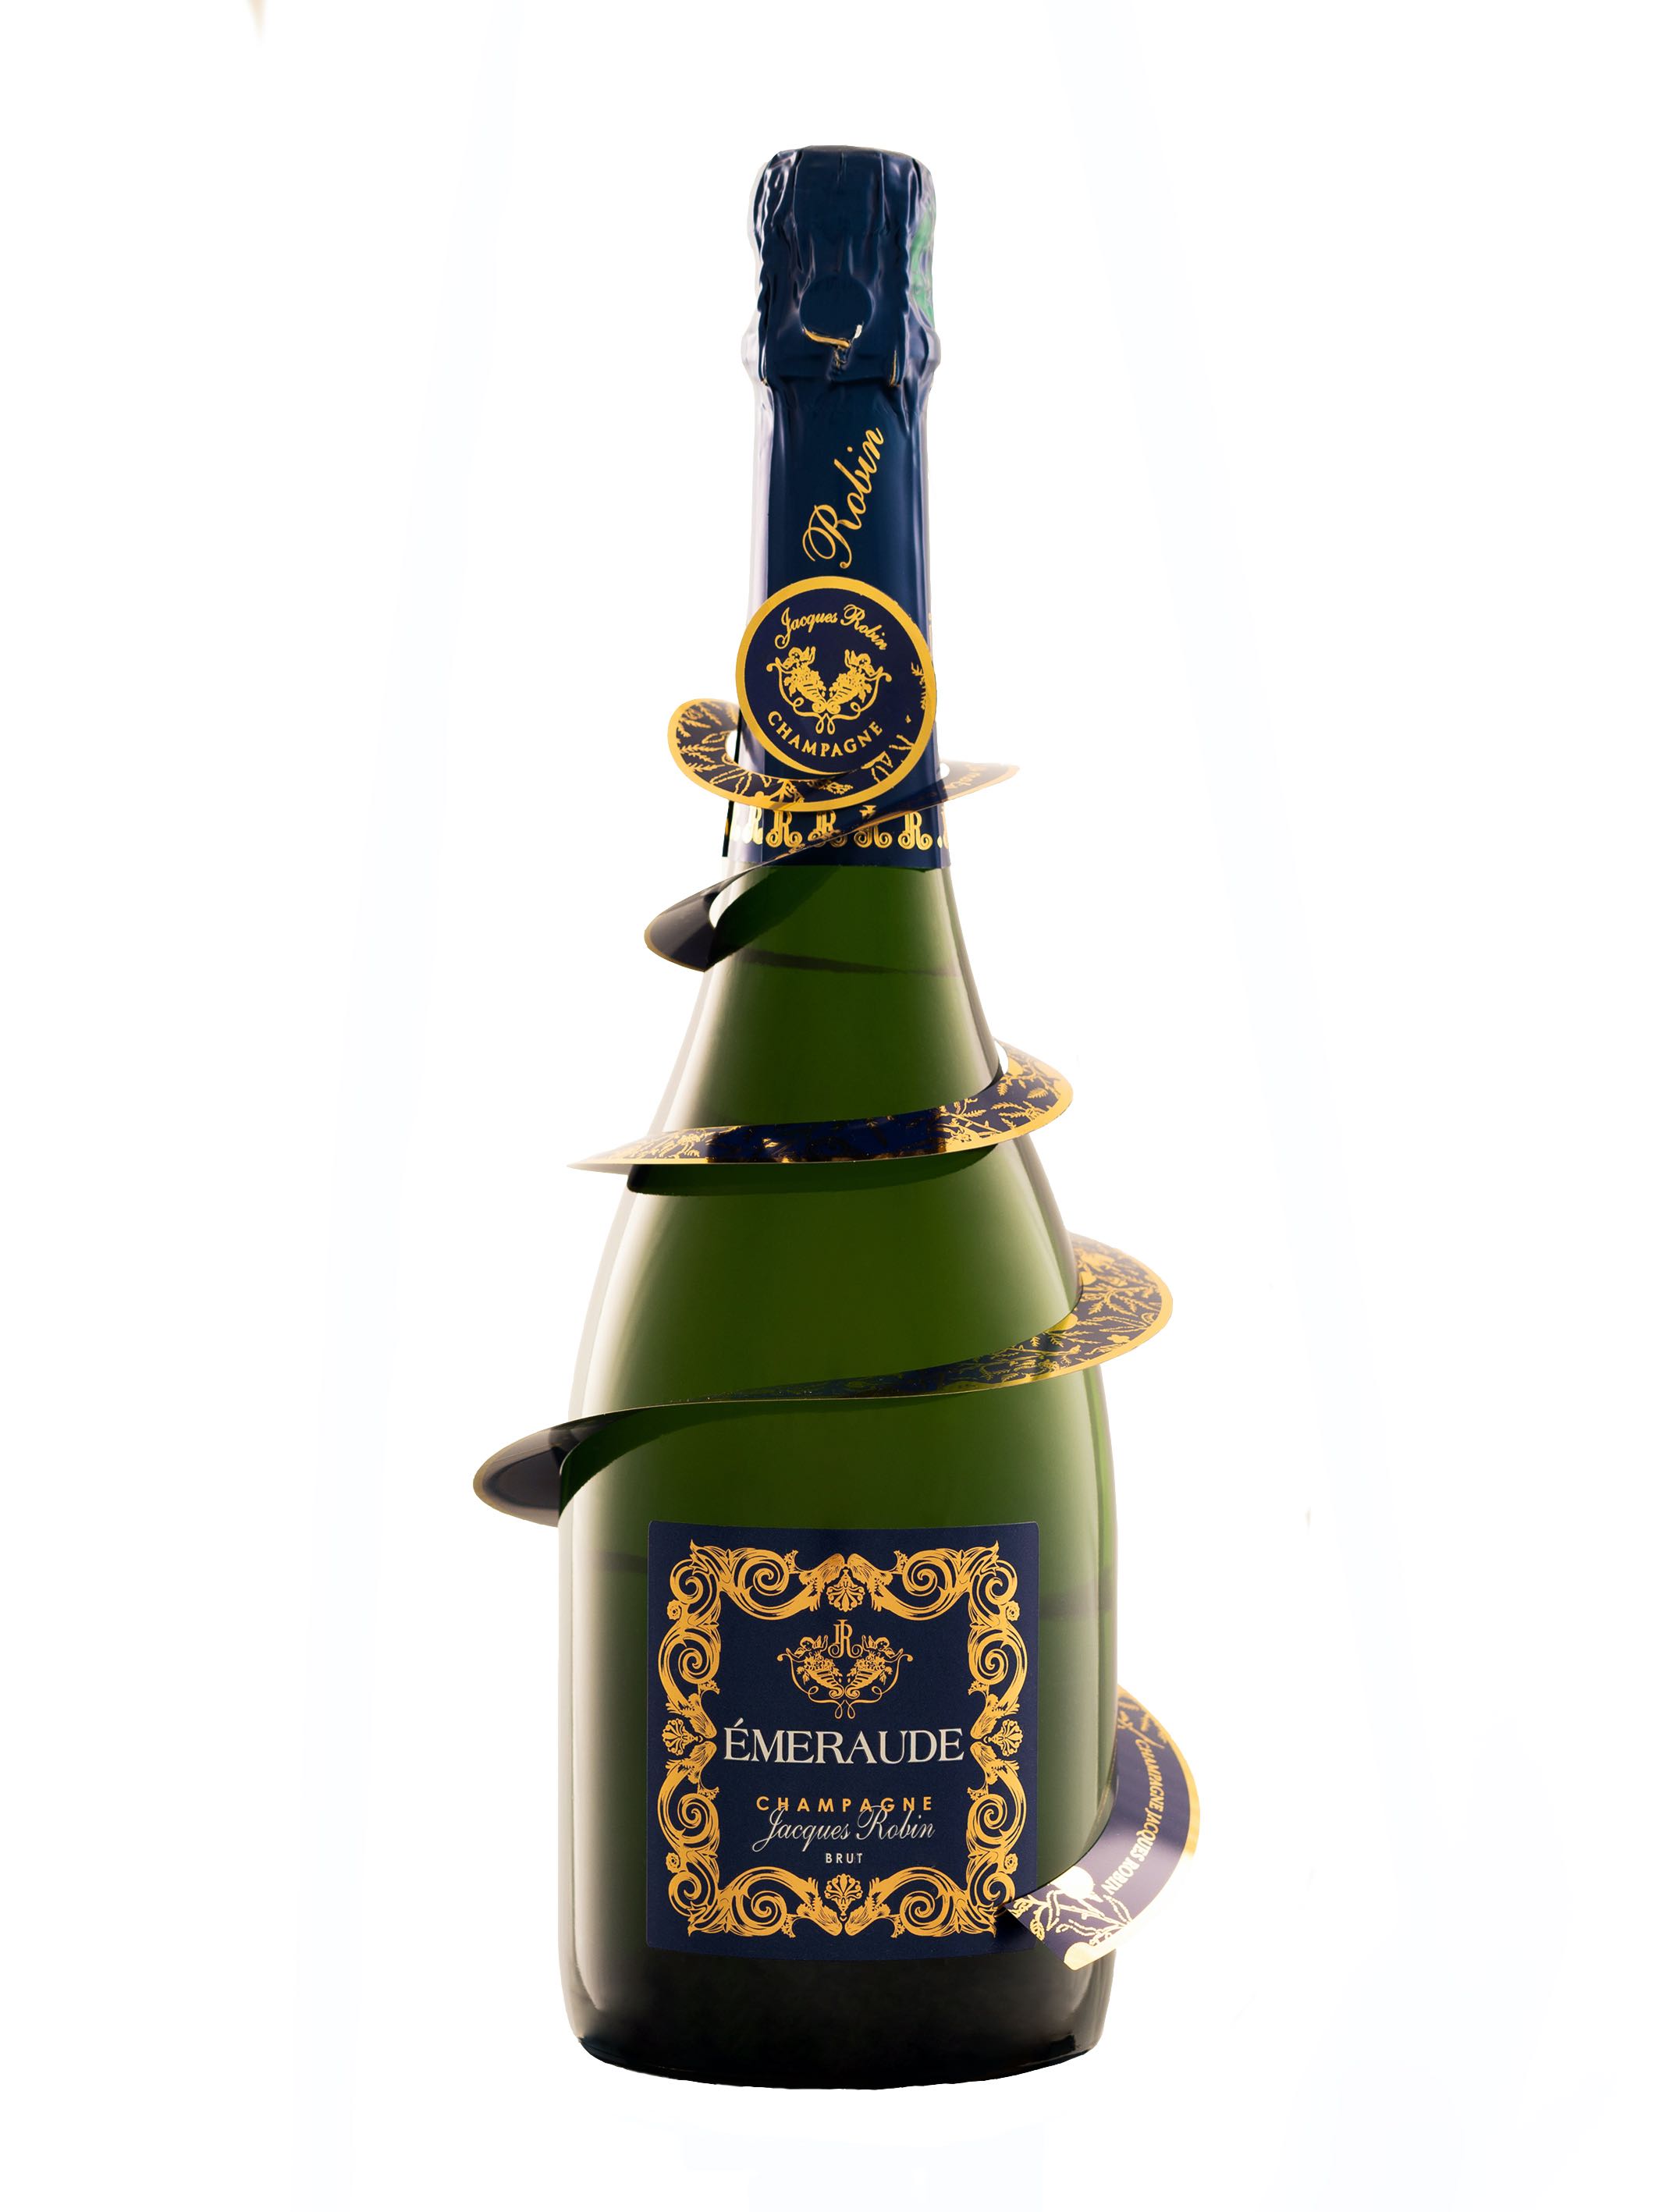 Jacques Robin Emeraude Brut Champagne